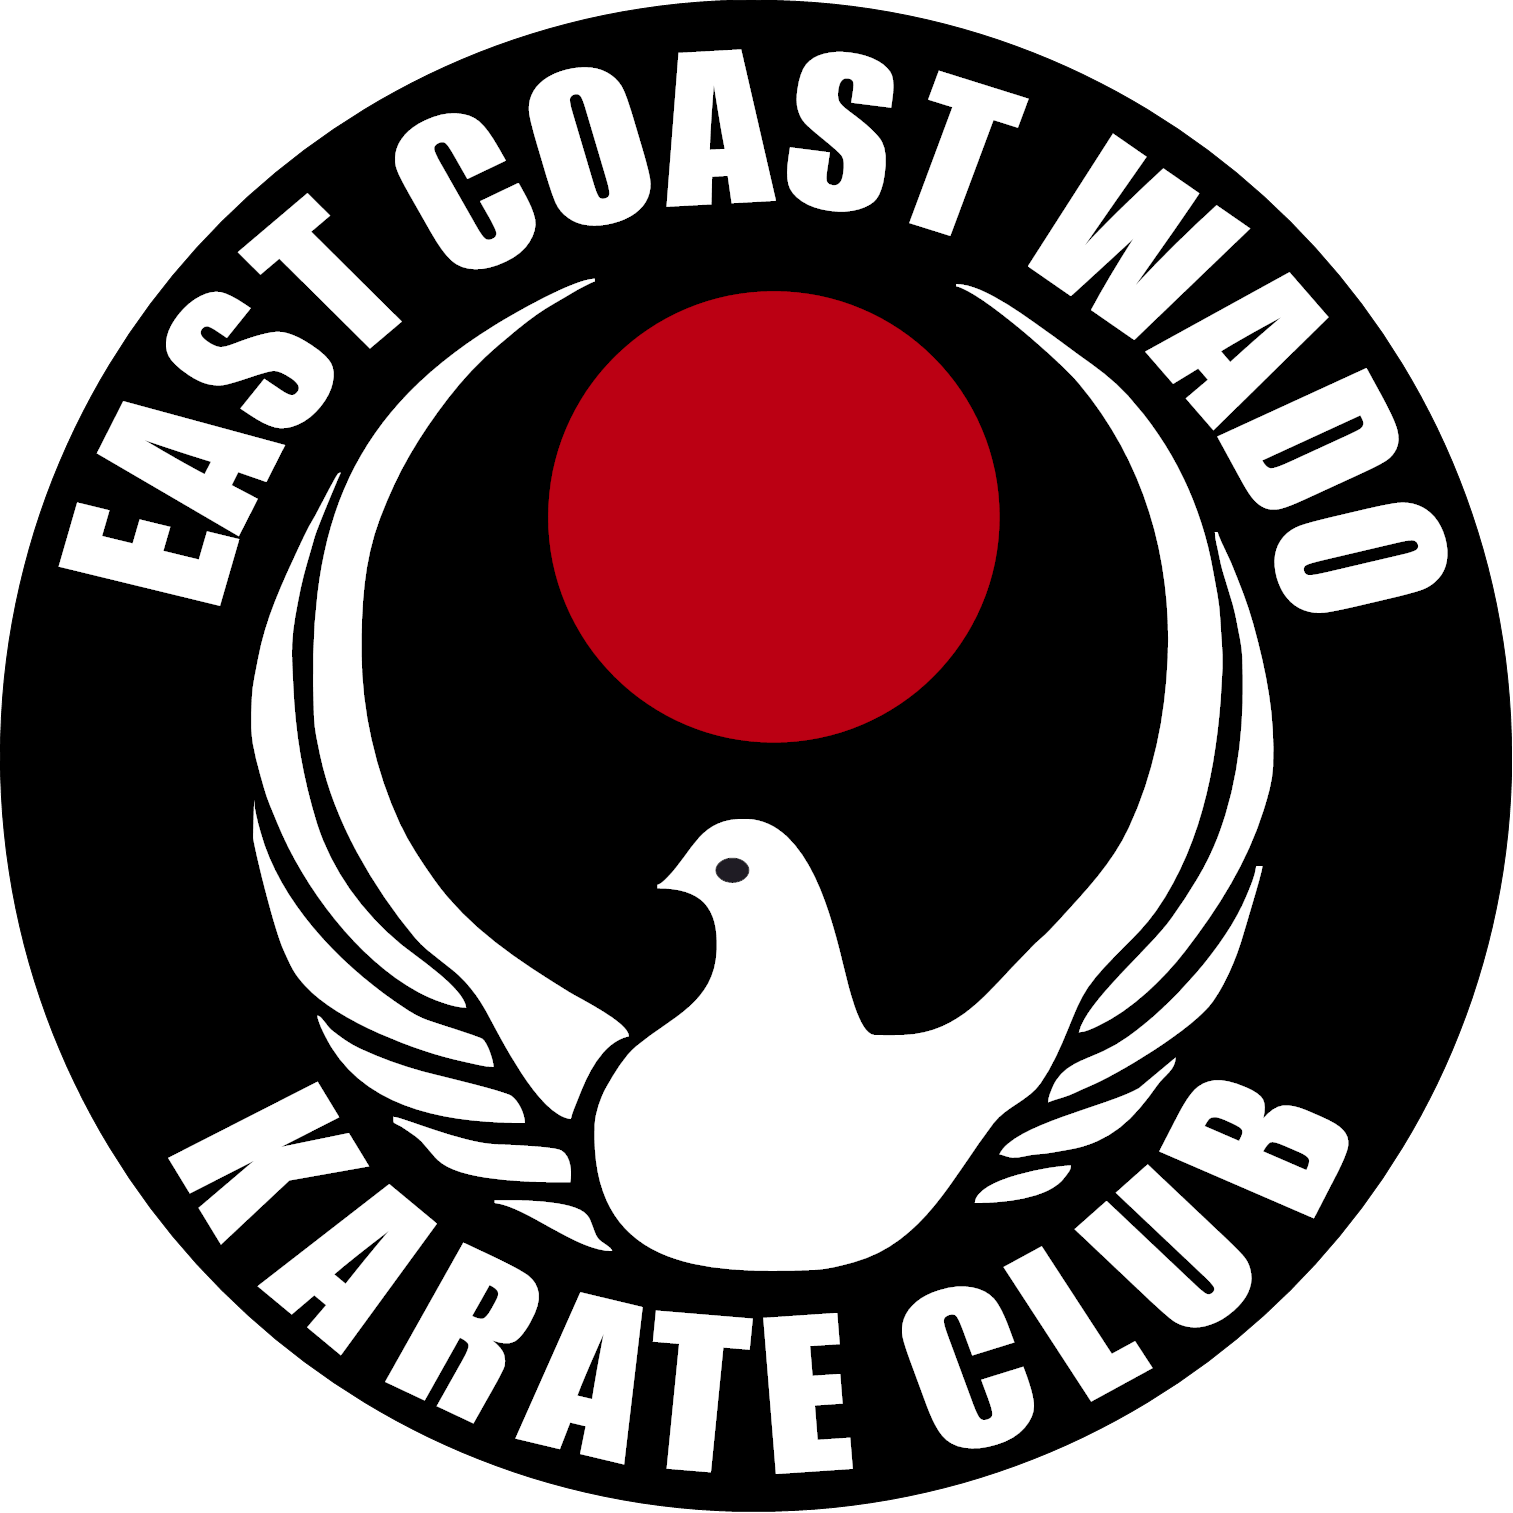 EAST COAST WADO KARATE CLUB